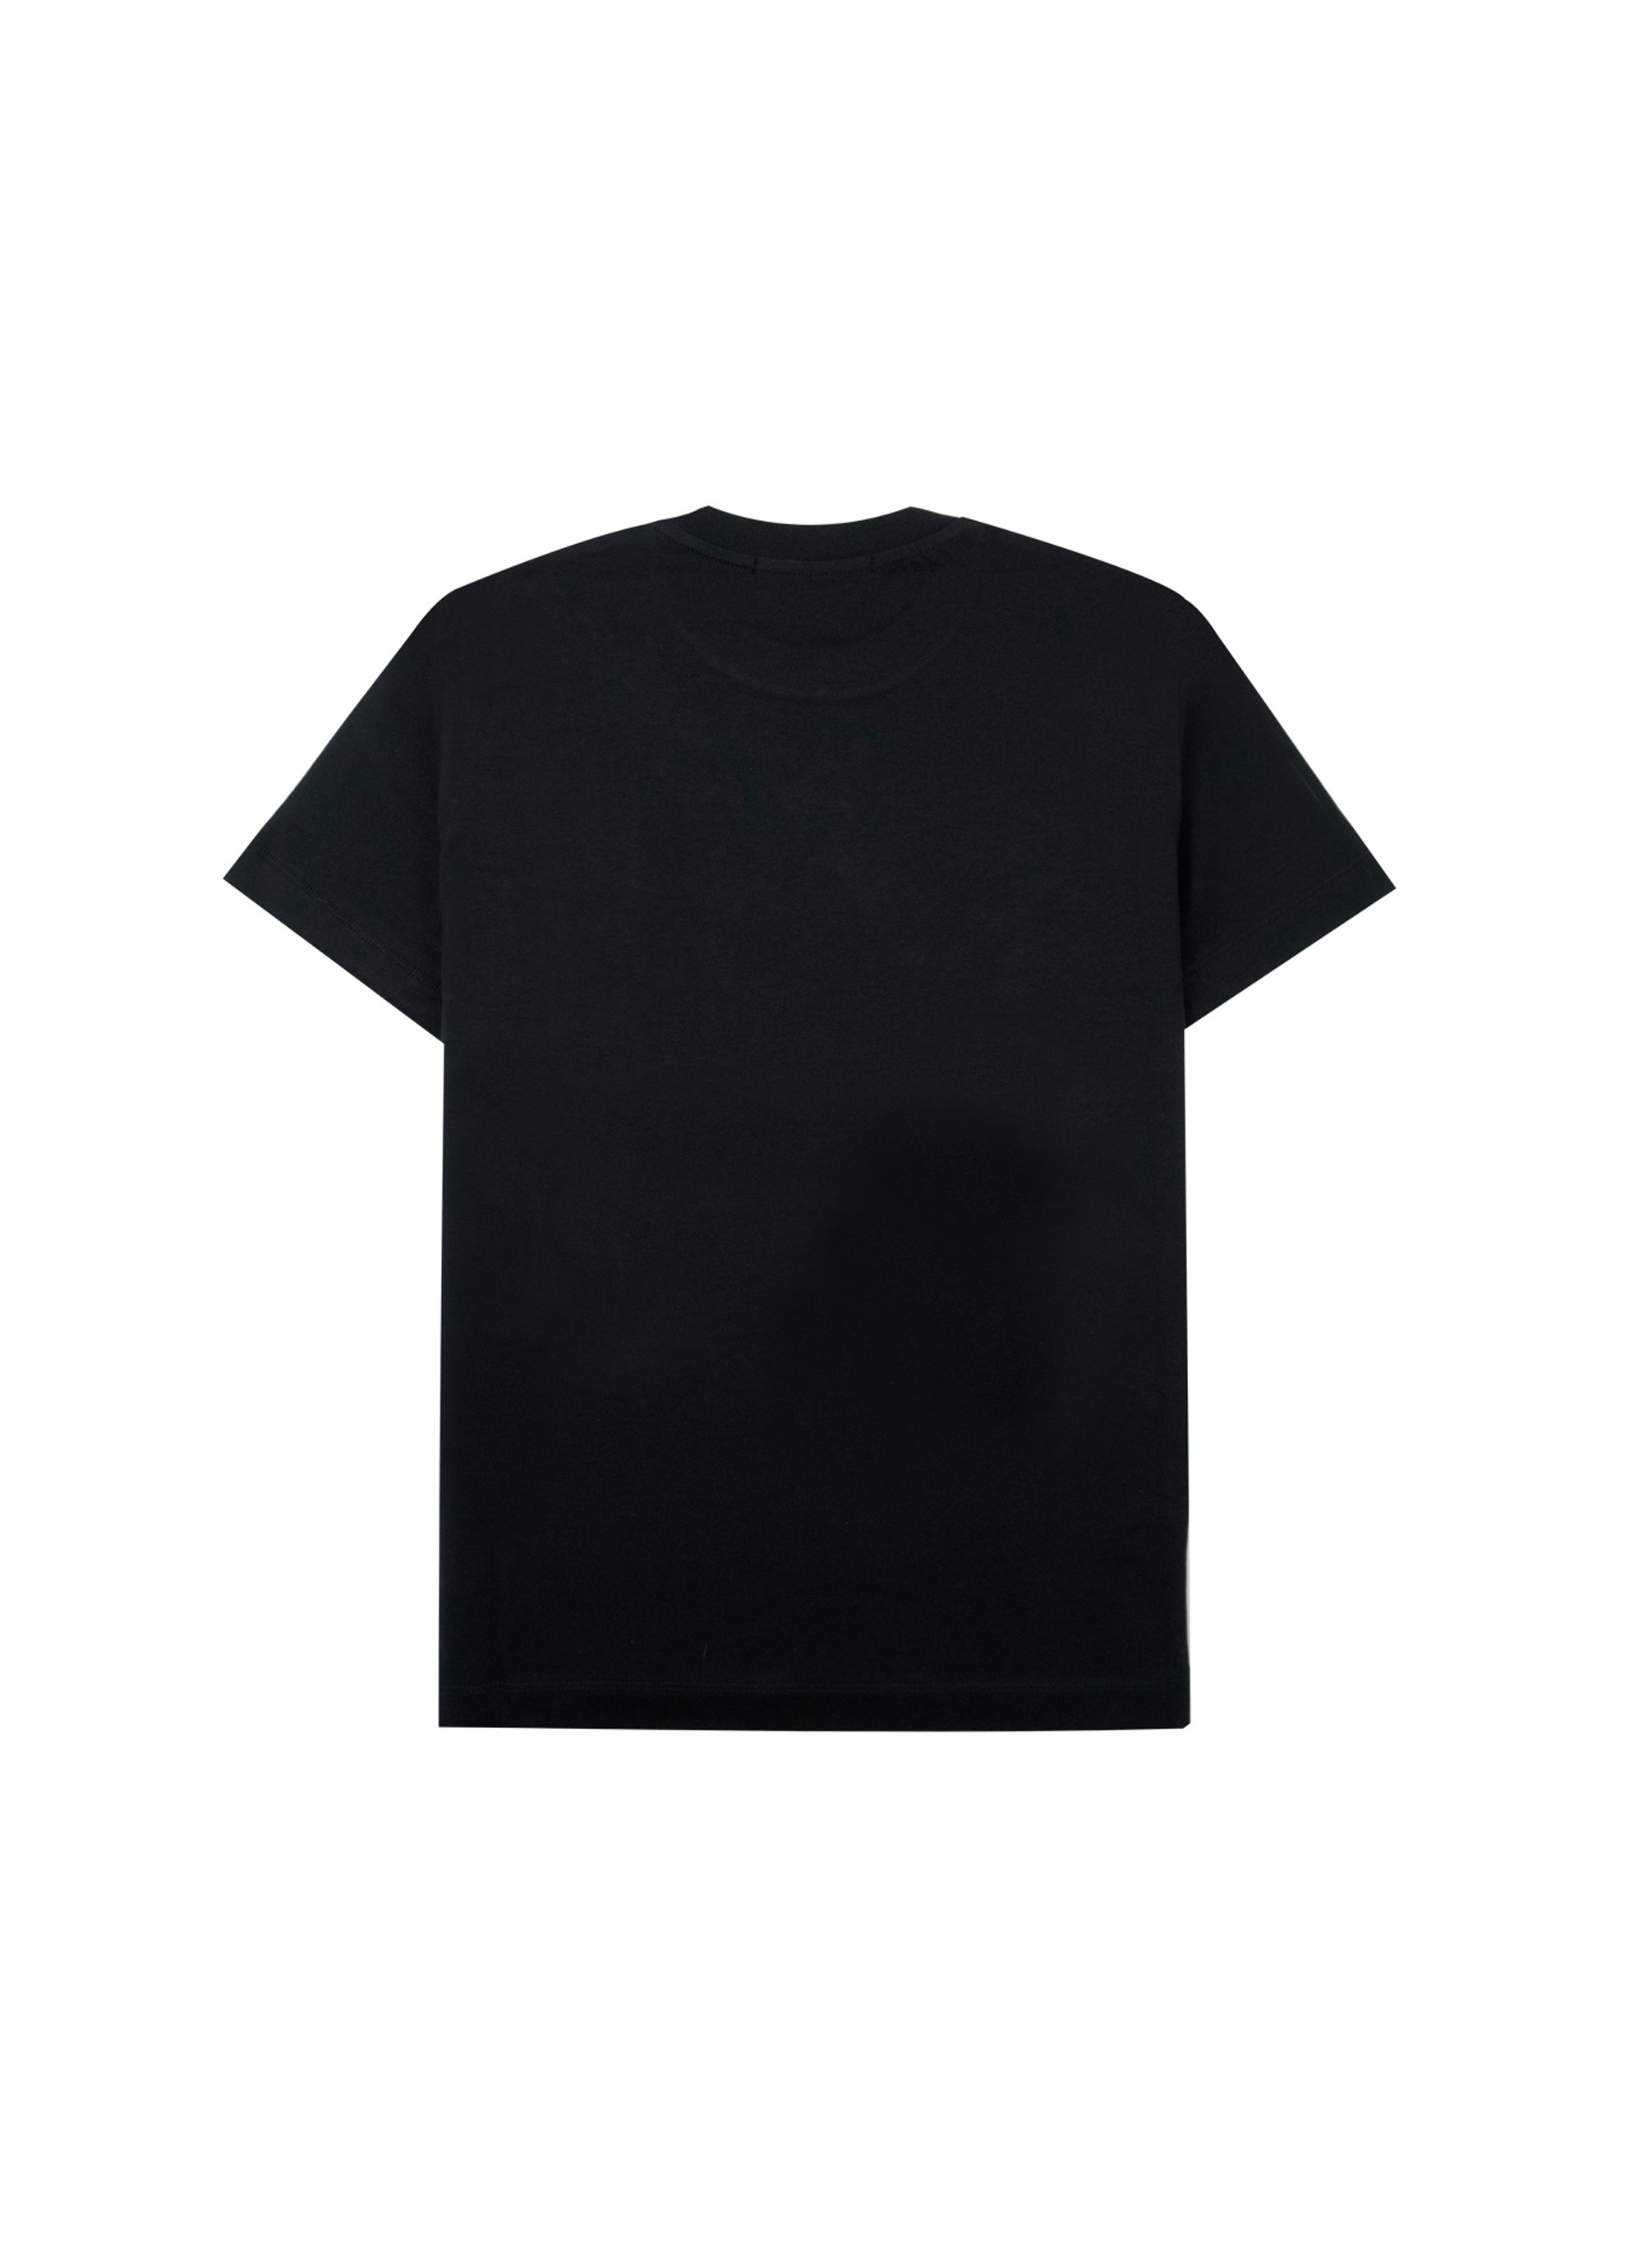 【NEW】MSGM ブラッシュロゴTシャツ＜GLITTER SILVER PRINT＞ 詳細画像 ブラック×グリッターシルバー 2